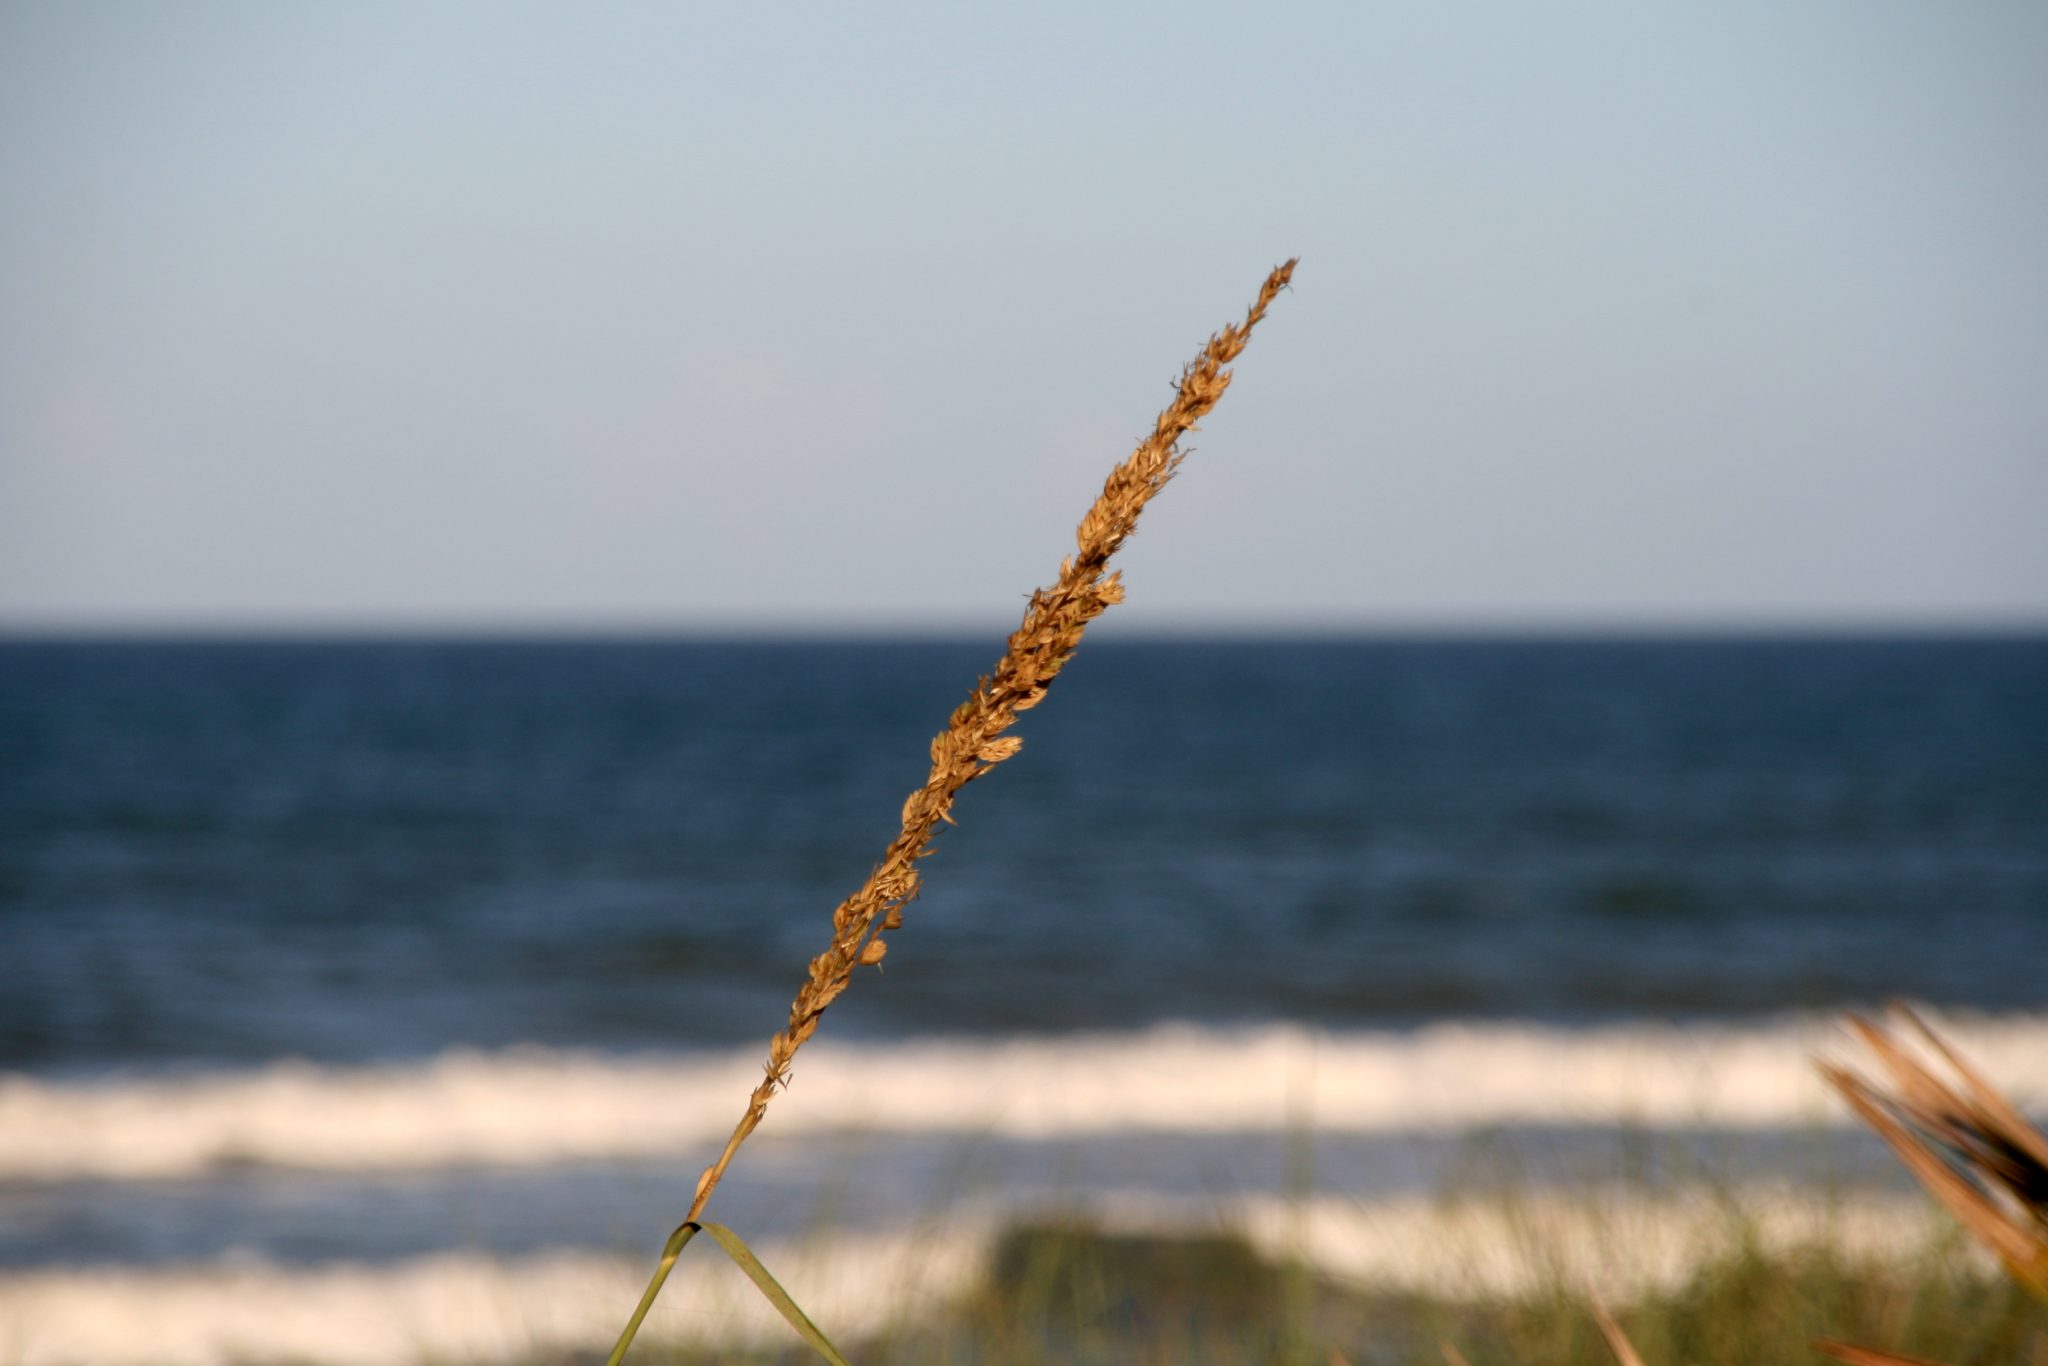 Blade of grass along the beach in Florida